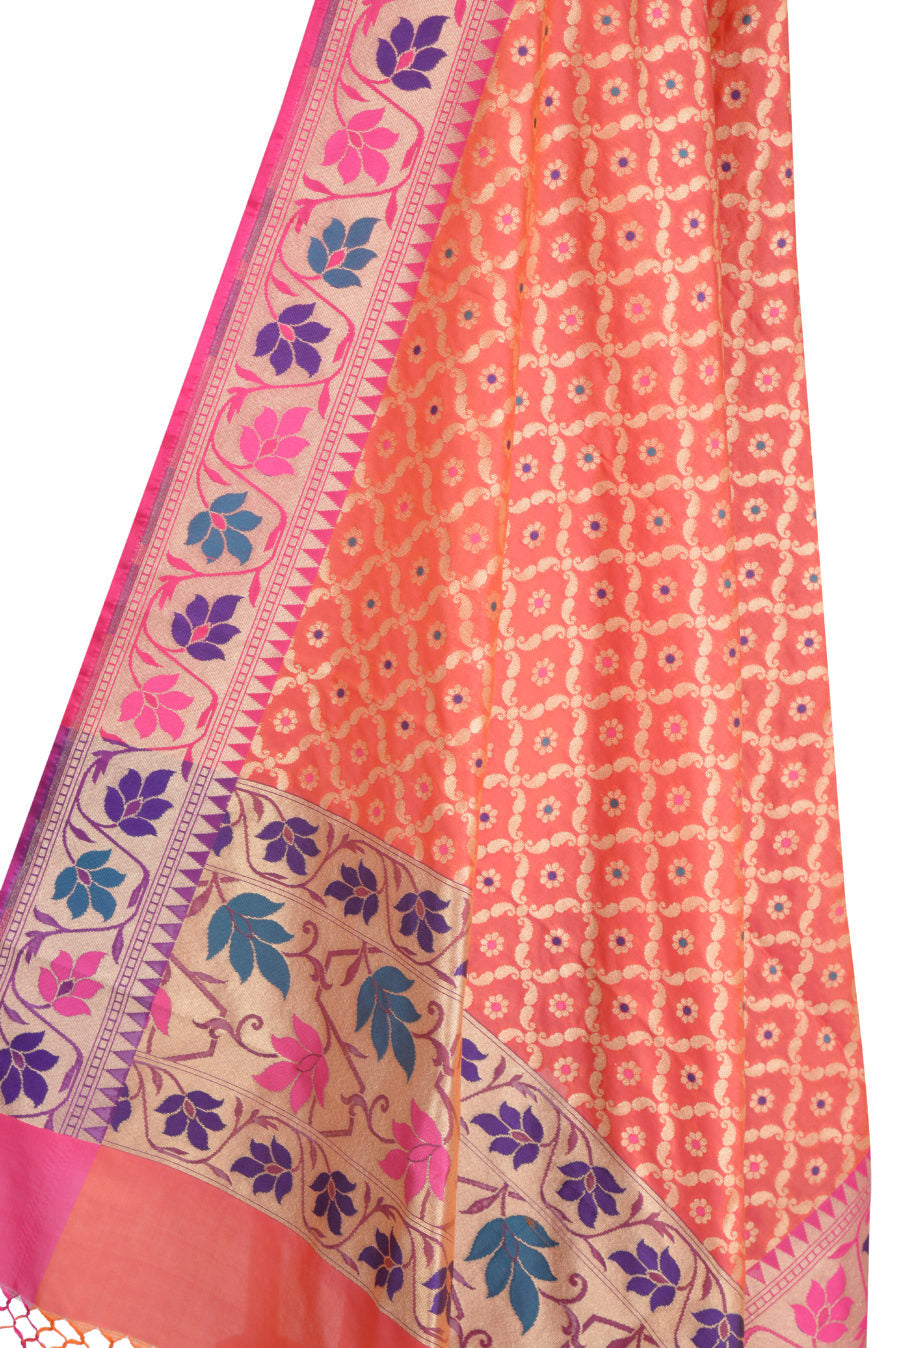 Red Orange Banarasi Dupatta with leaf jaal and floral motifs (2) Close up